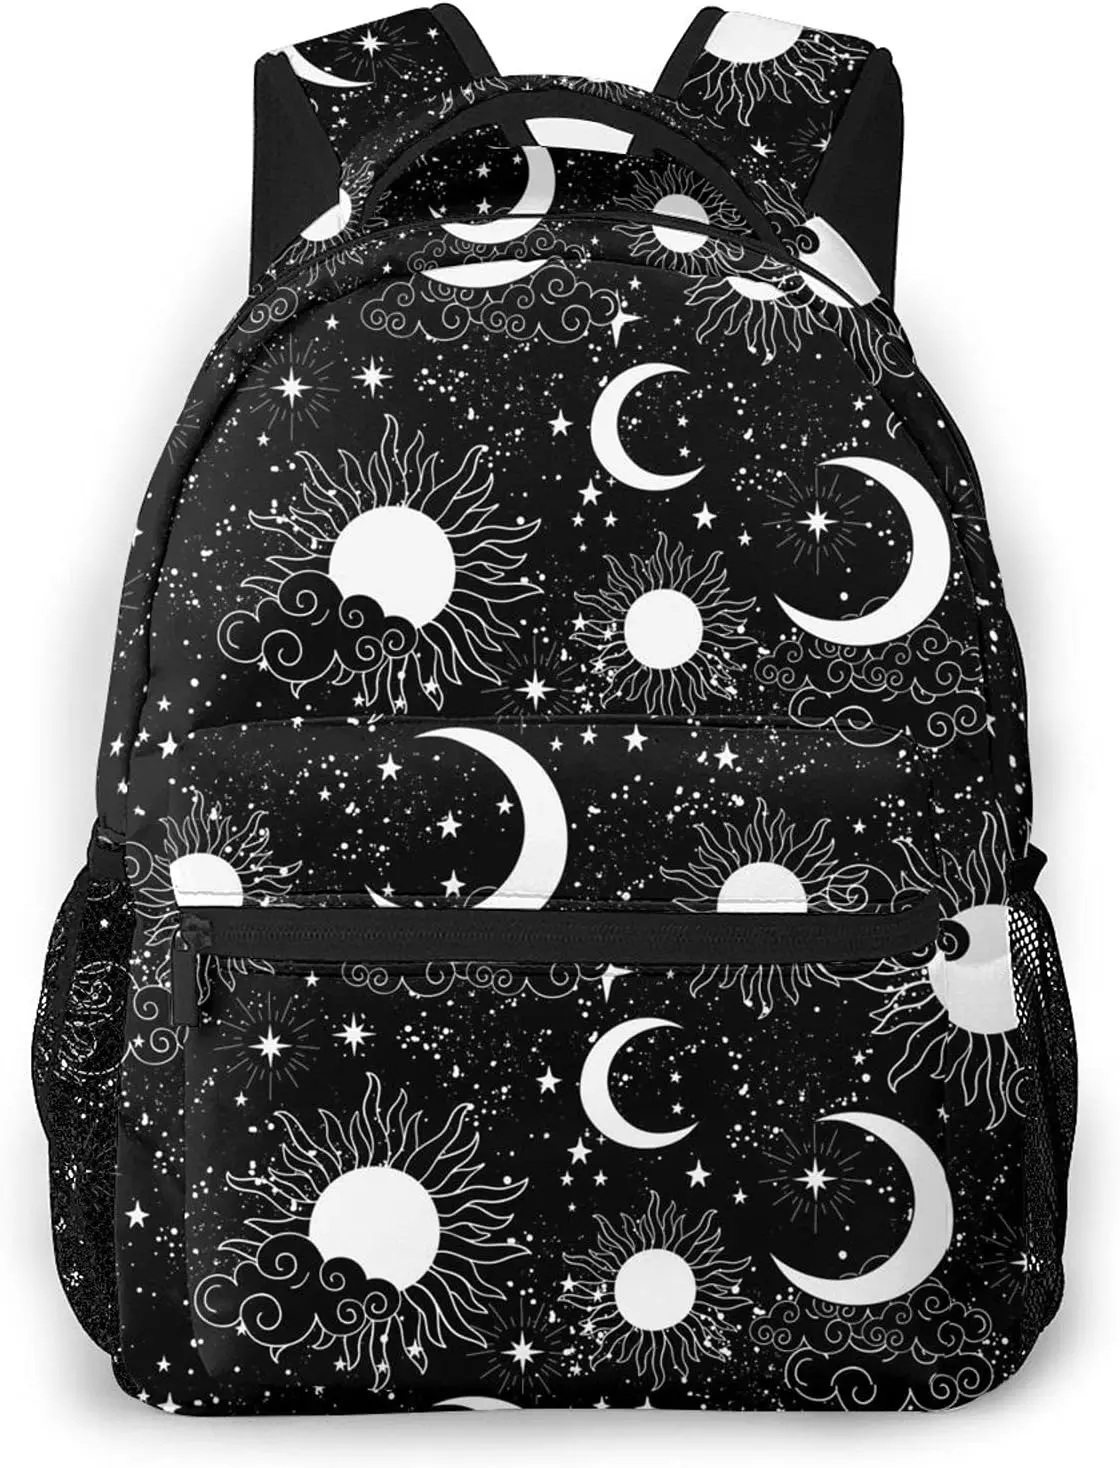 

Sun Moon Stars Astrology for Student Boy Girl laptop Bookbag Durable Casual Daypack Student College Lightweight Hiking Bag